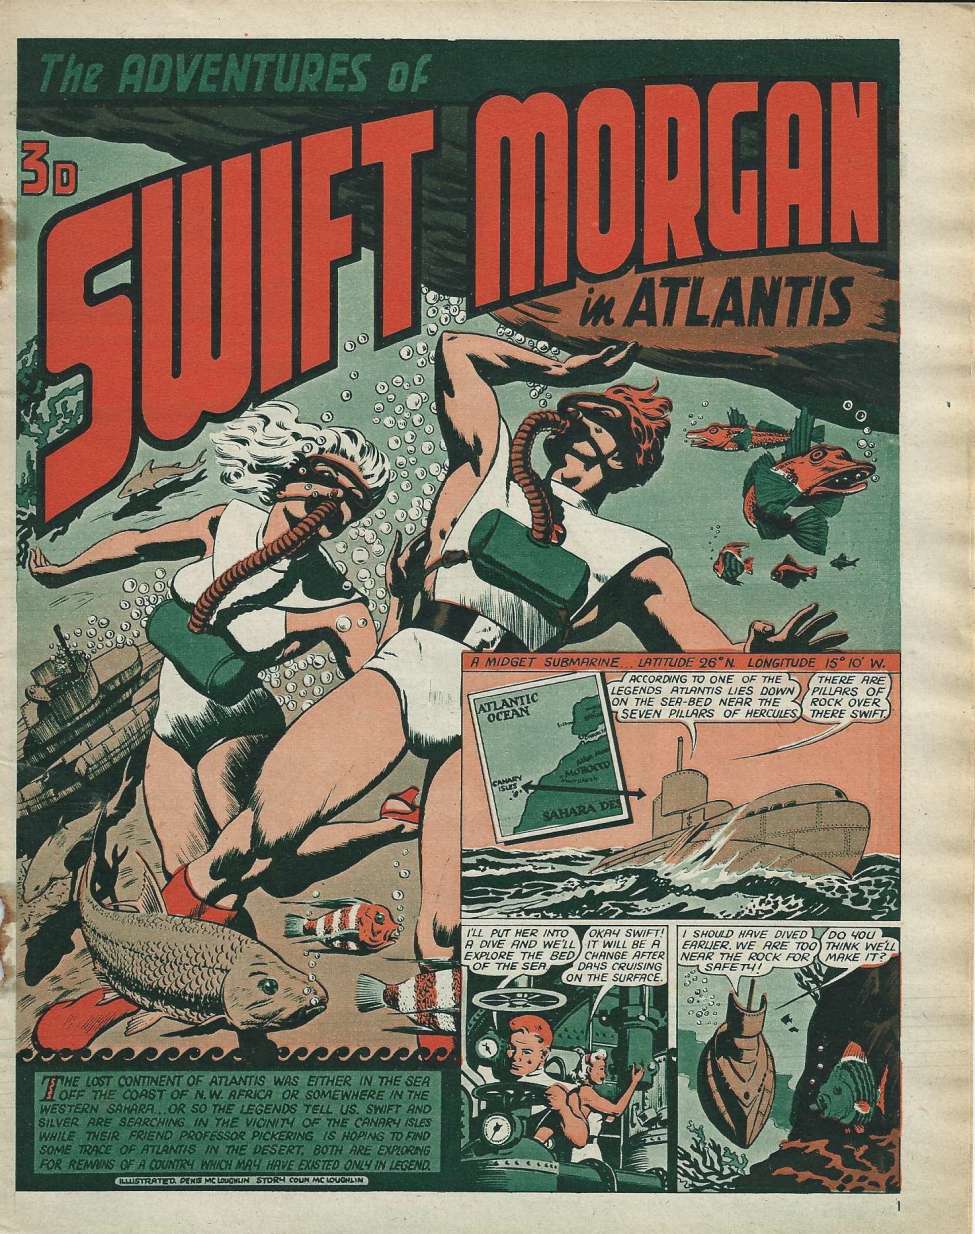 Book Cover For Swift Morgan 16 (in Atlantis)